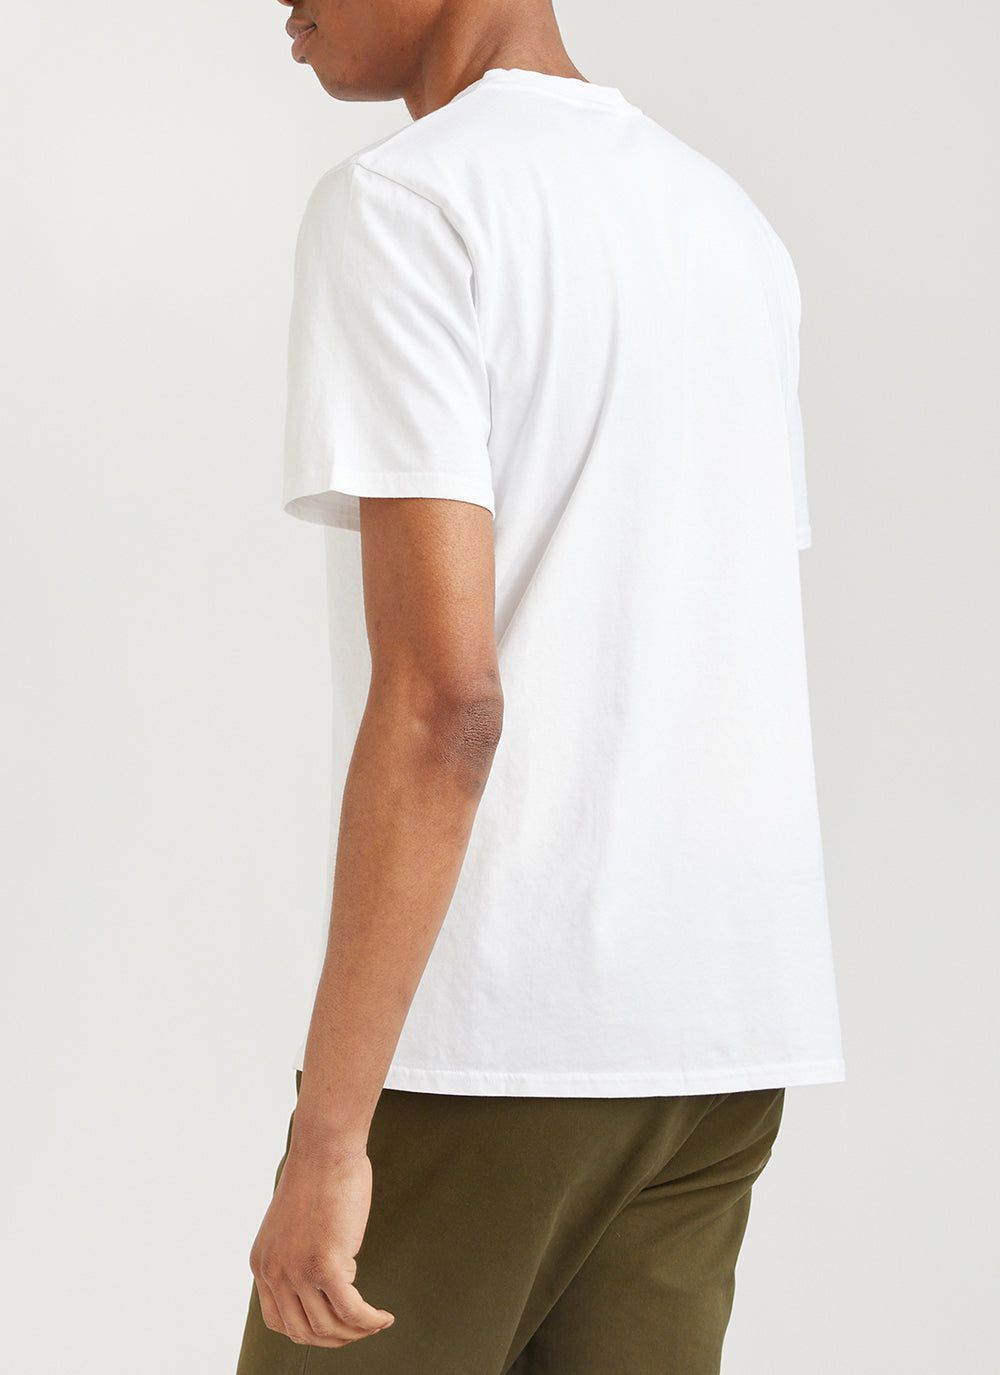 Men's T Shirt | Bonsai Tree | Embroidered Cotton | White & Percival ...